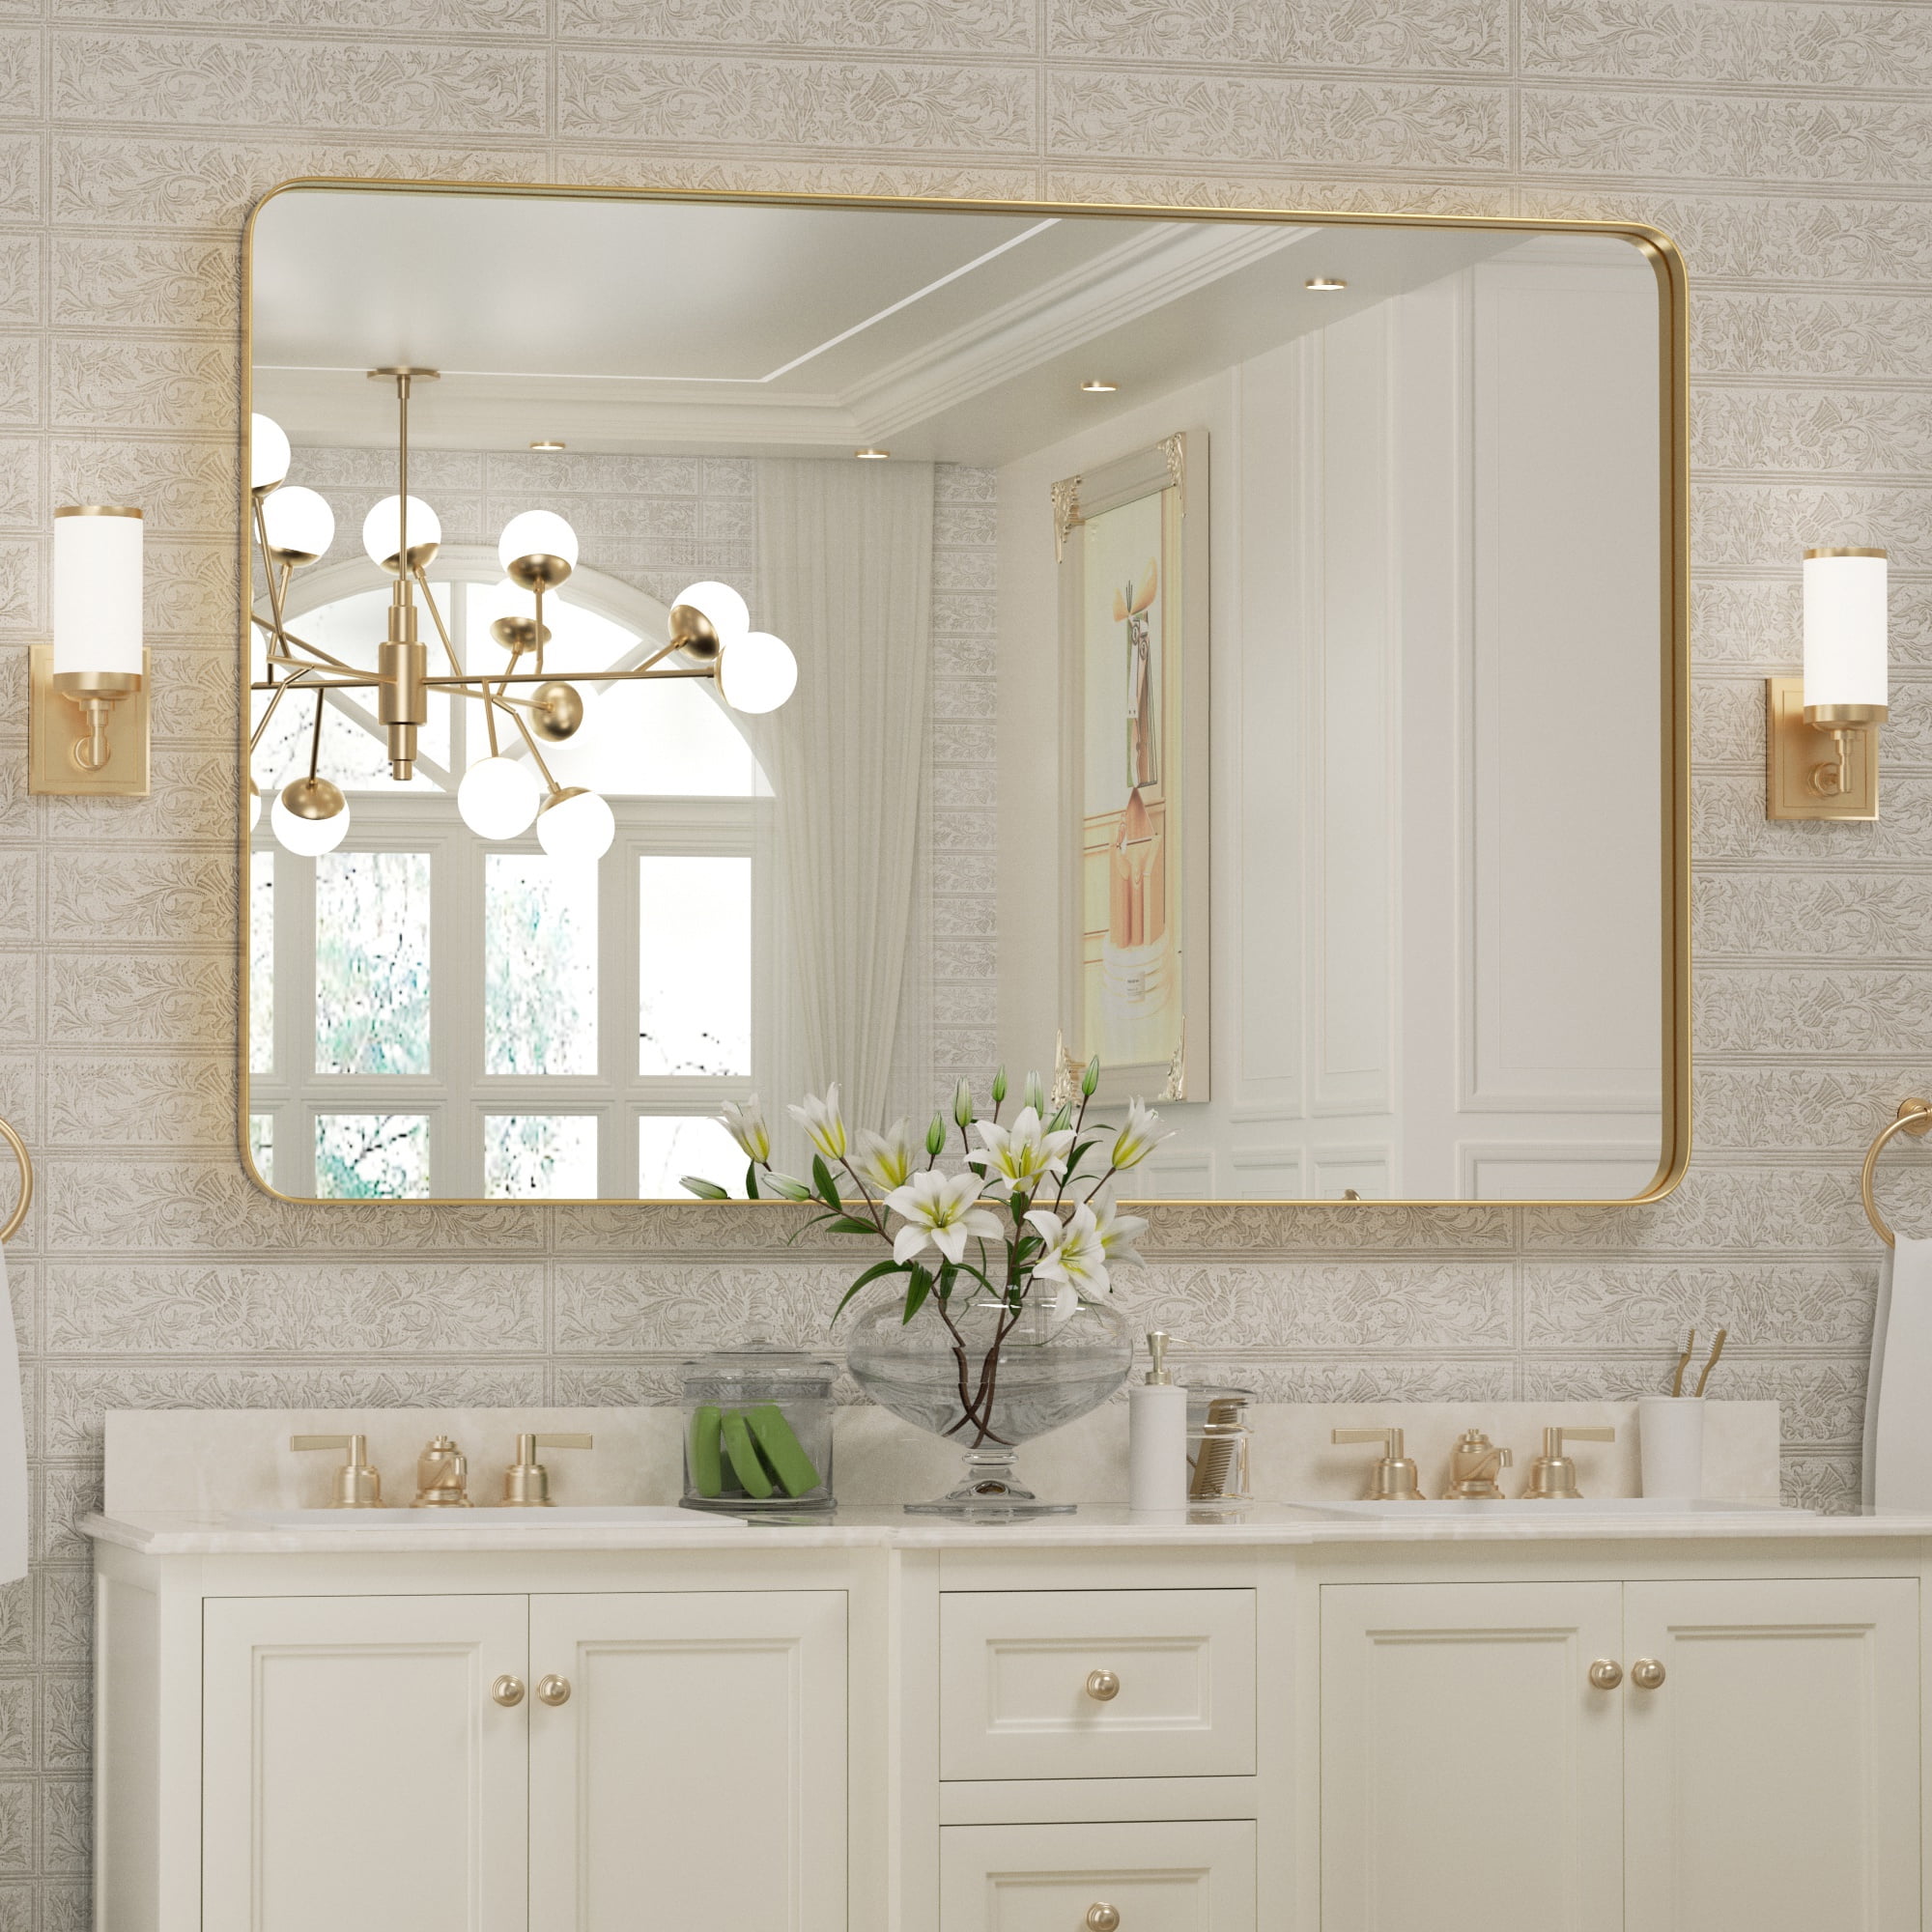  Barnyard Designs 24 inch Gold Round Mirror, Bathroom Vanity  Wall Mirrors, Circle Mirror for Desk, Metal Framed Bedroom Mirror : Home &  Kitchen